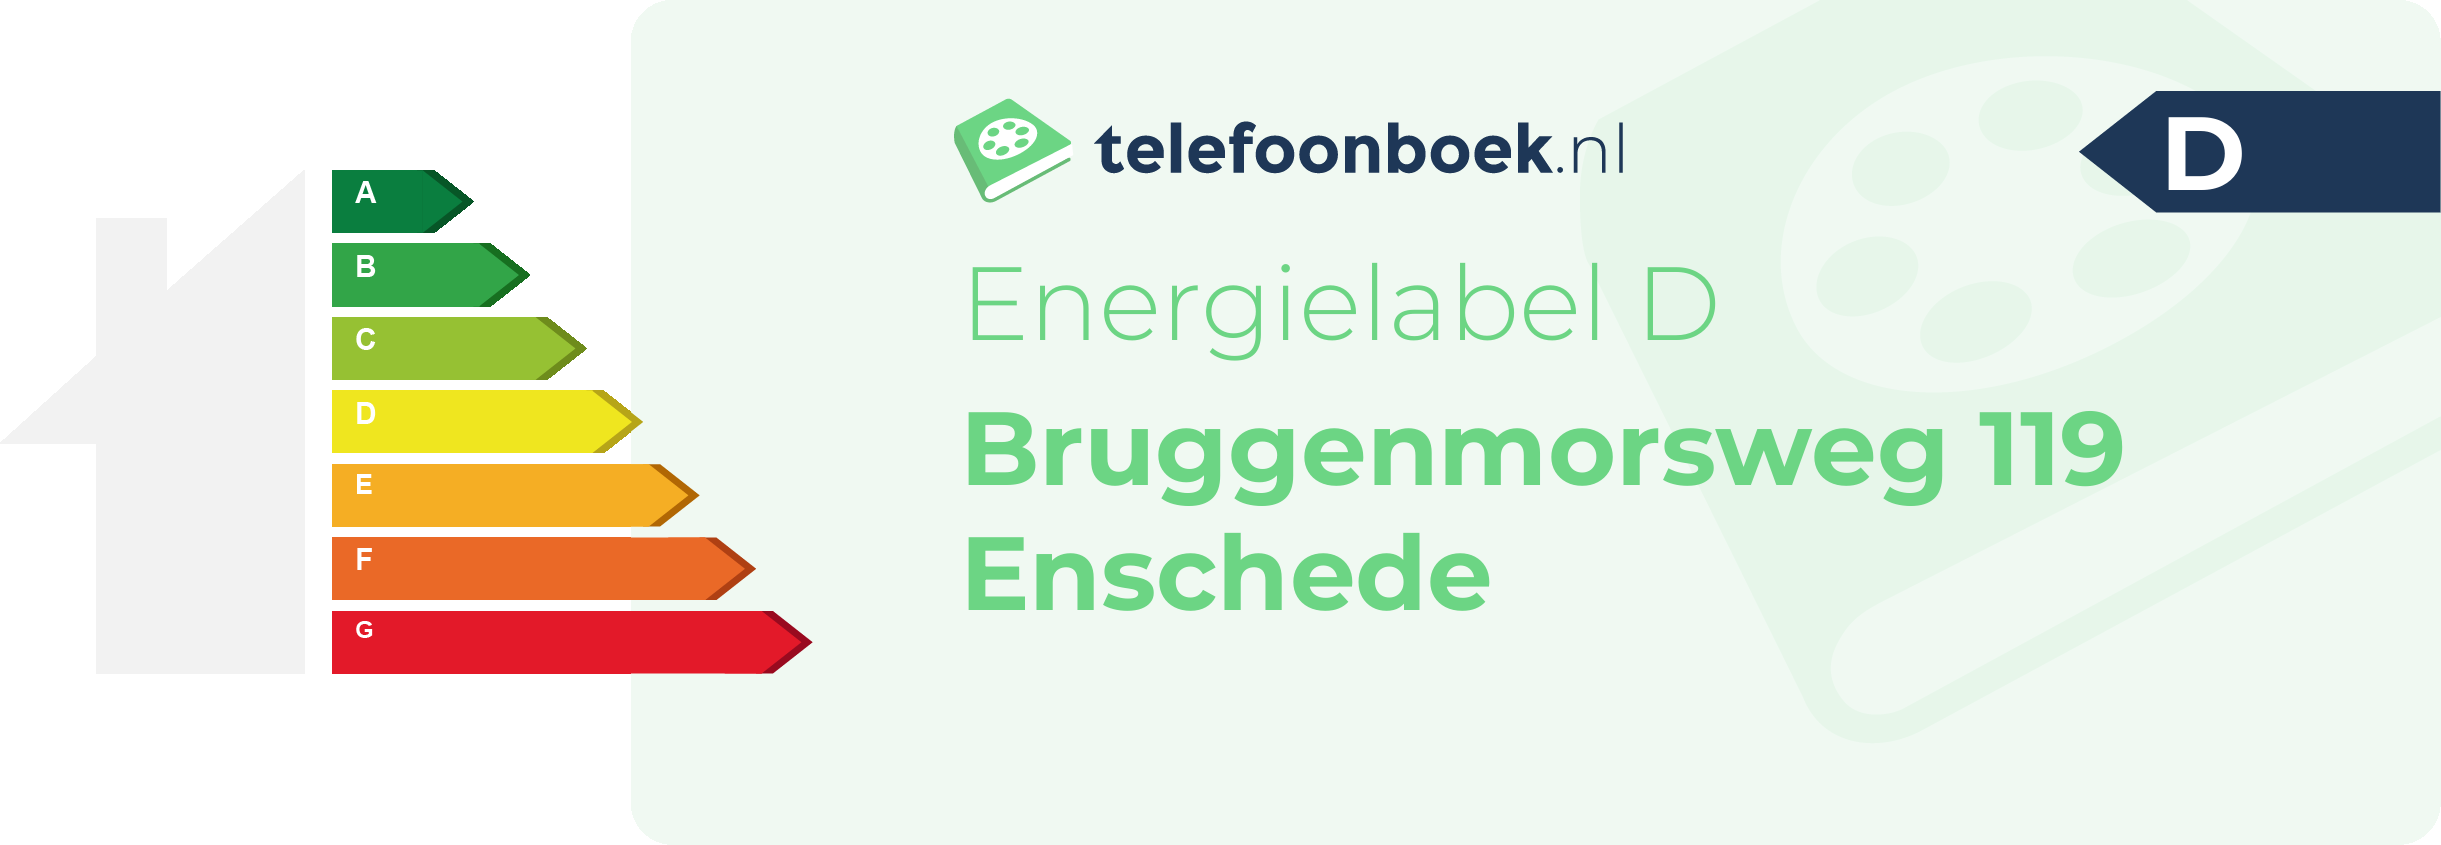 Energielabel Bruggenmorsweg 119 Enschede